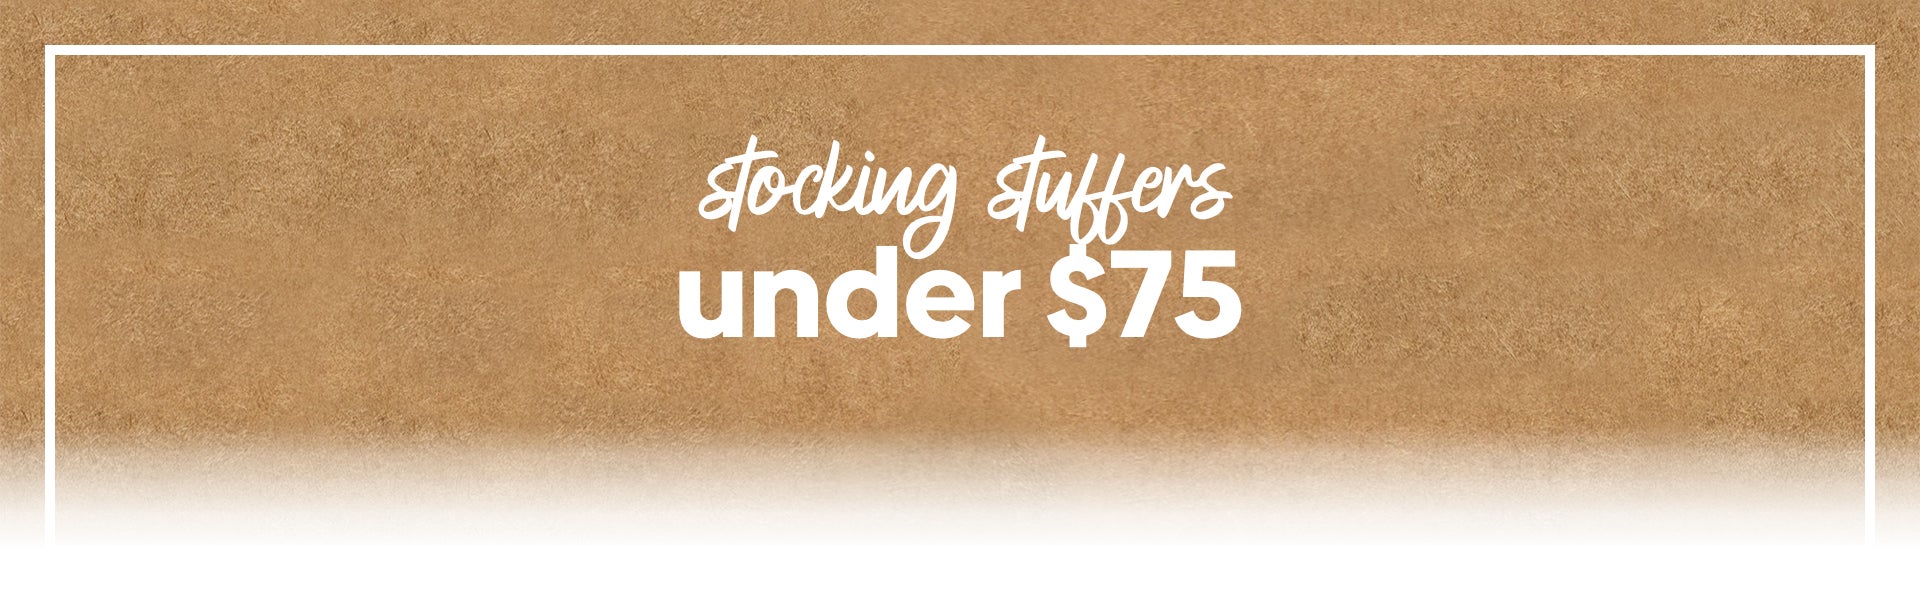 stocking stuffers under $75